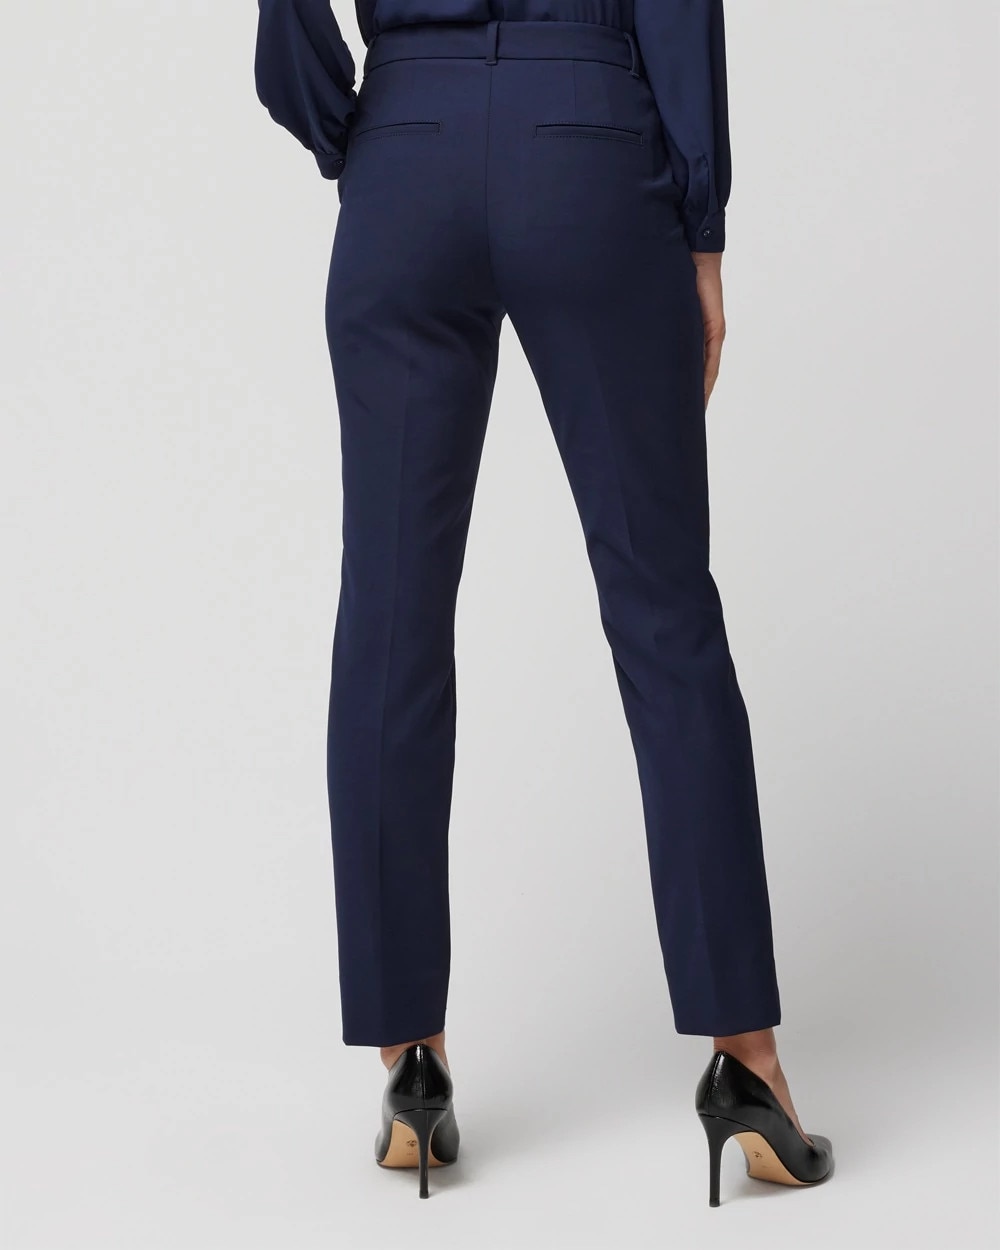 Worthington Modern fit Blue Ankle Dress Pants Size 12T | Ankle dress pants,  Clothes design, Dress pants